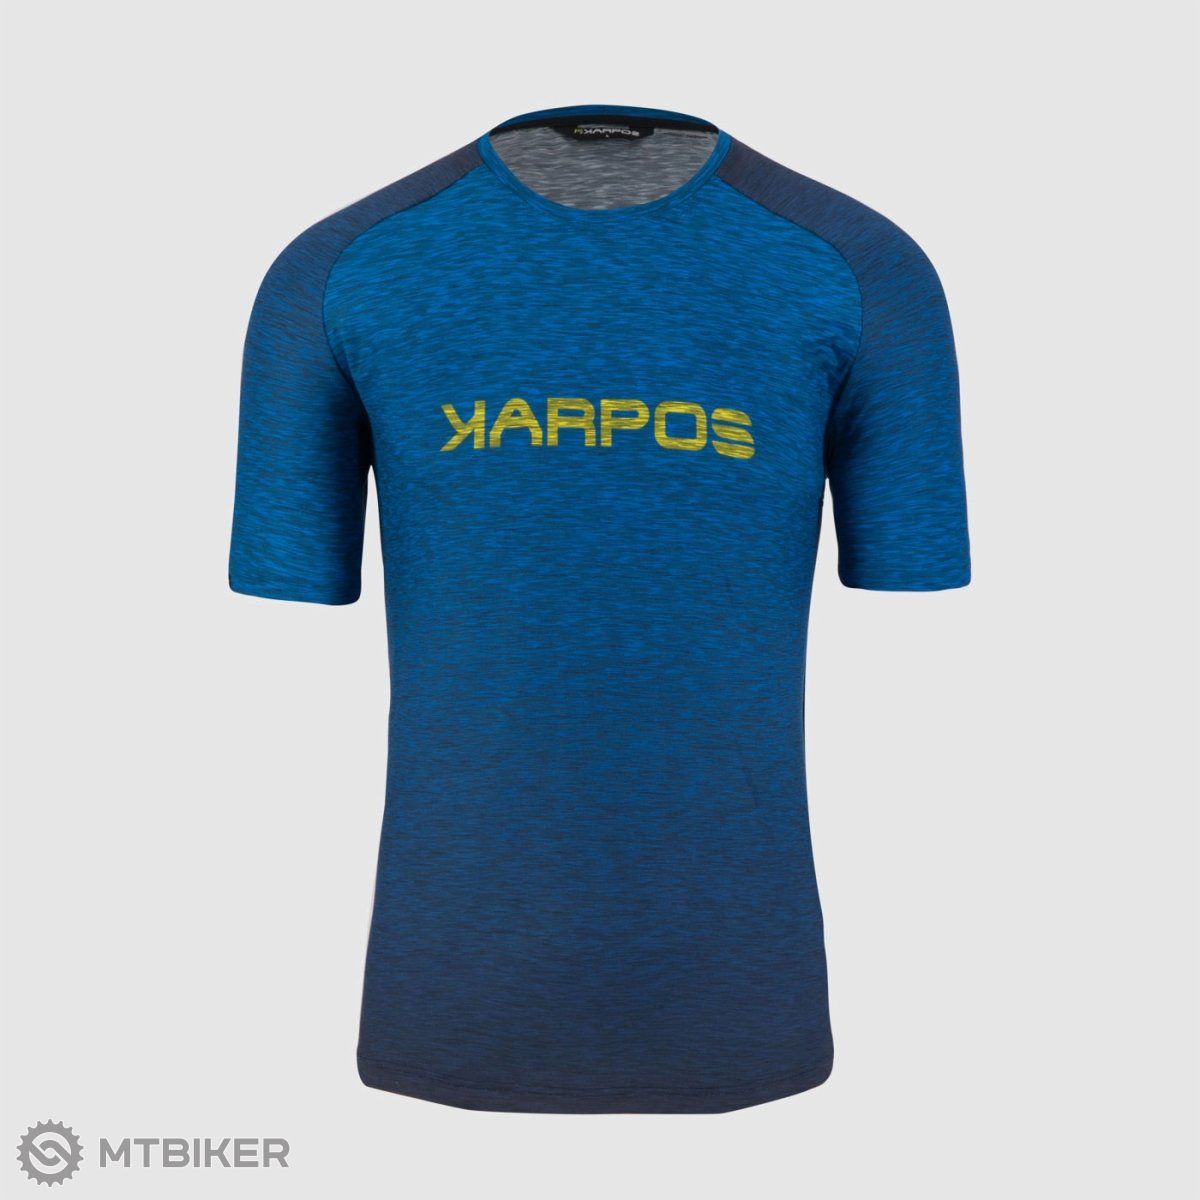 Karpos PRATO PIAZZA shirt, outer space/indigo bunting/high visibility